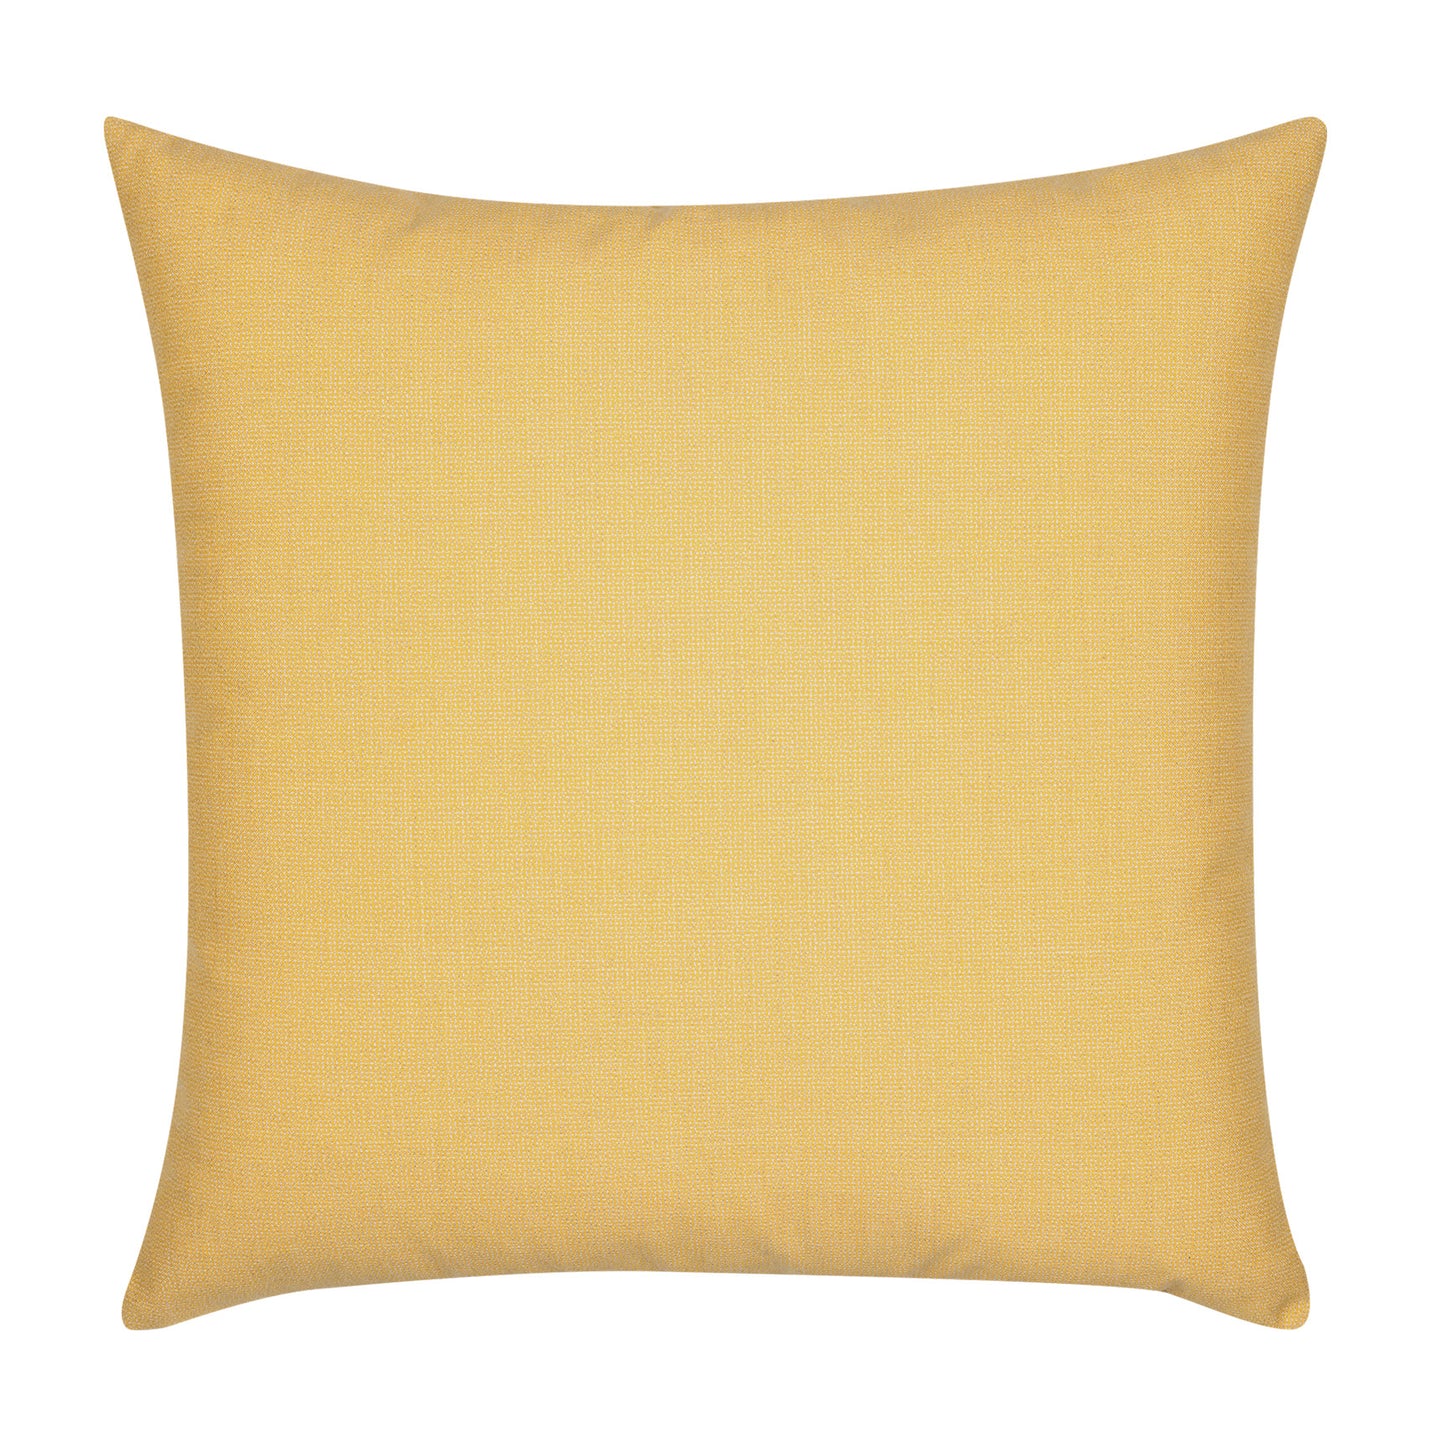 20" Square Elaine Smith Pillow  Solid Lemon, image 1